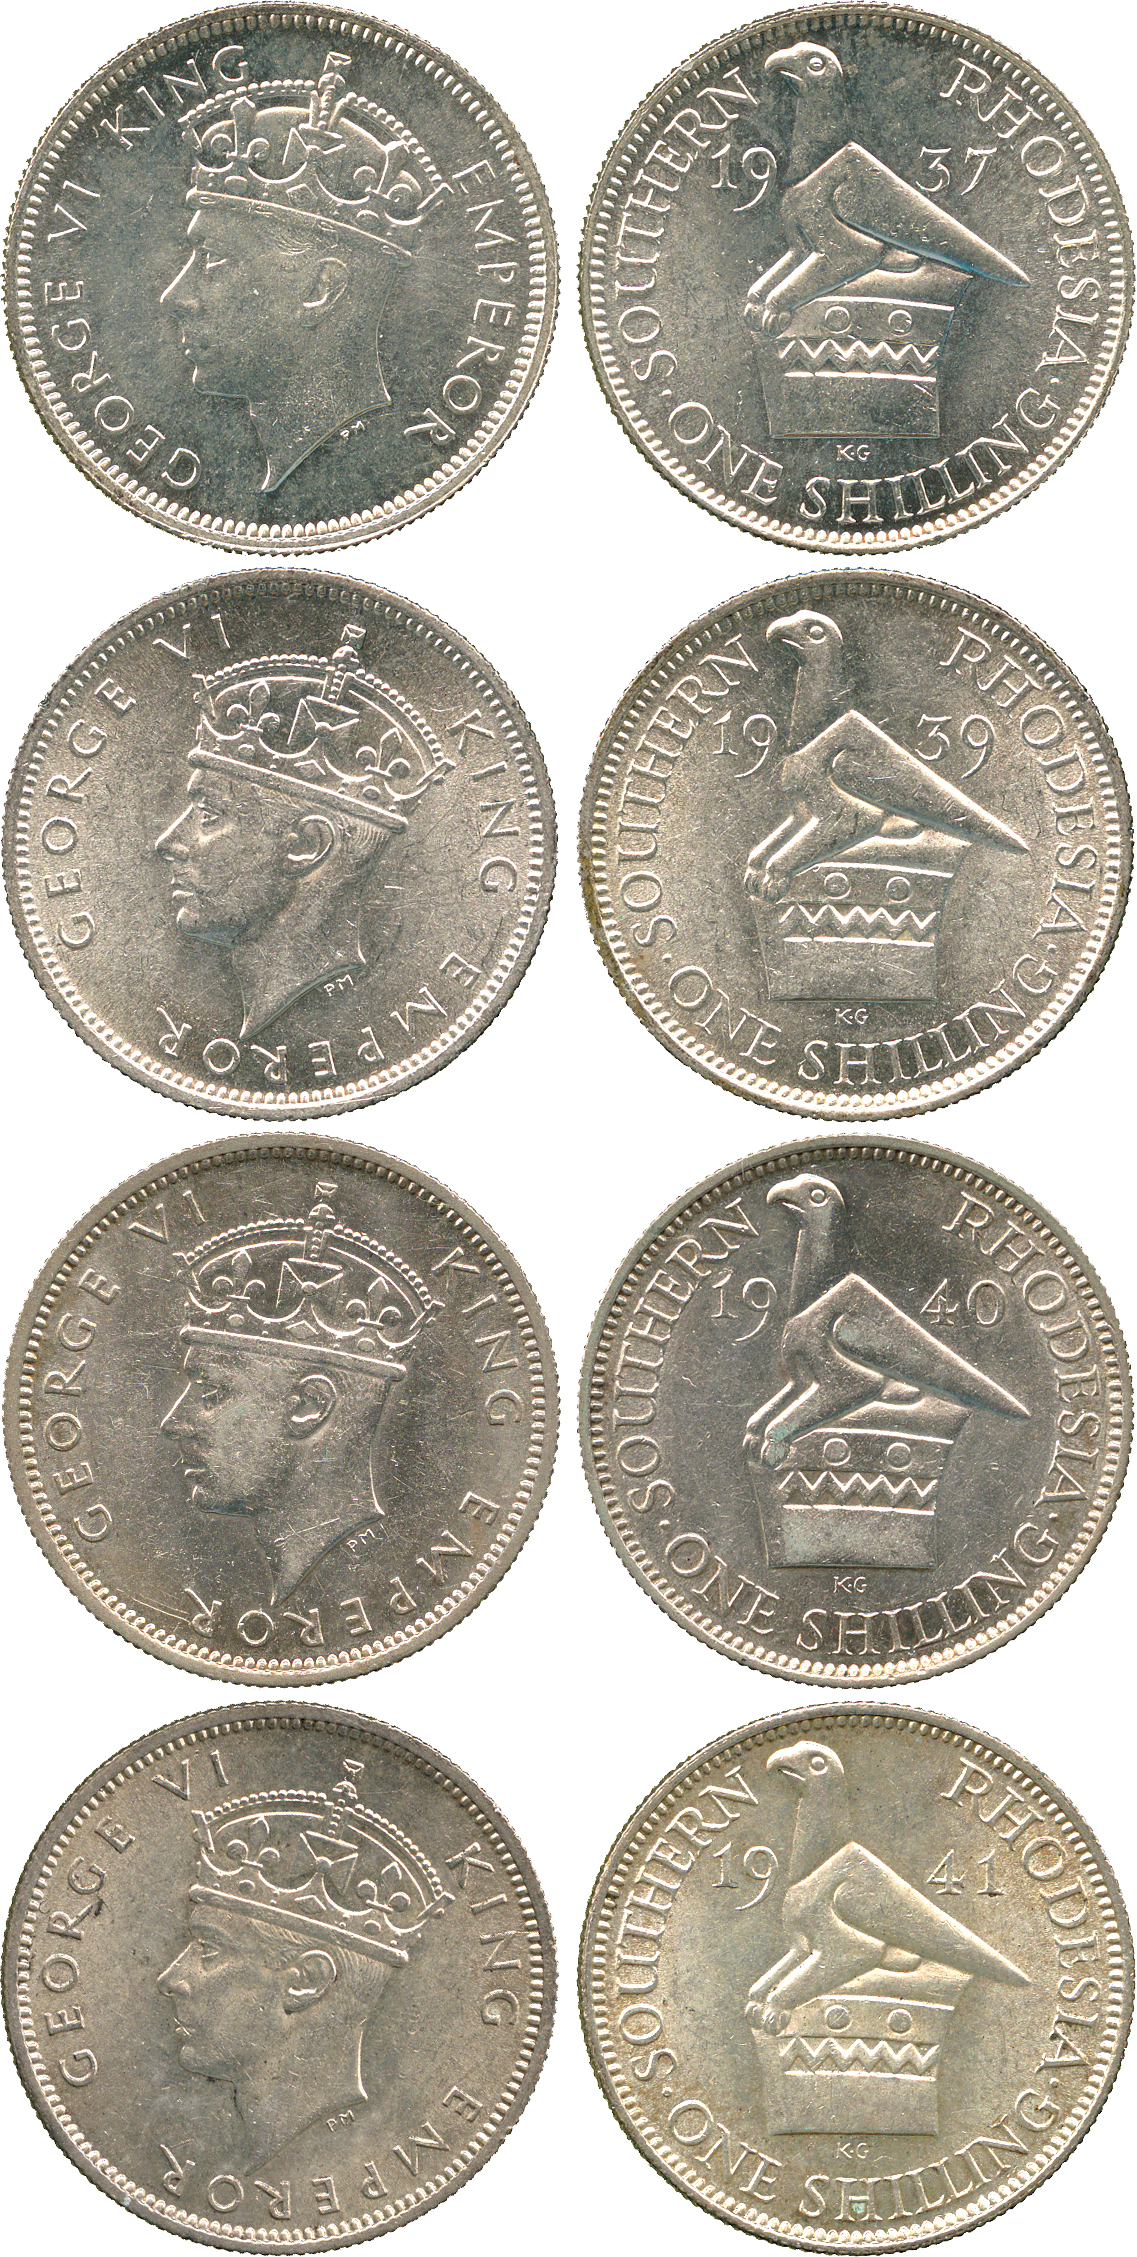 † AFRICA. Rhodesia. Southern Rhodesia. Silver Shillings (4), 1937, 1939, 1940, 1941 (KM 11, 18).